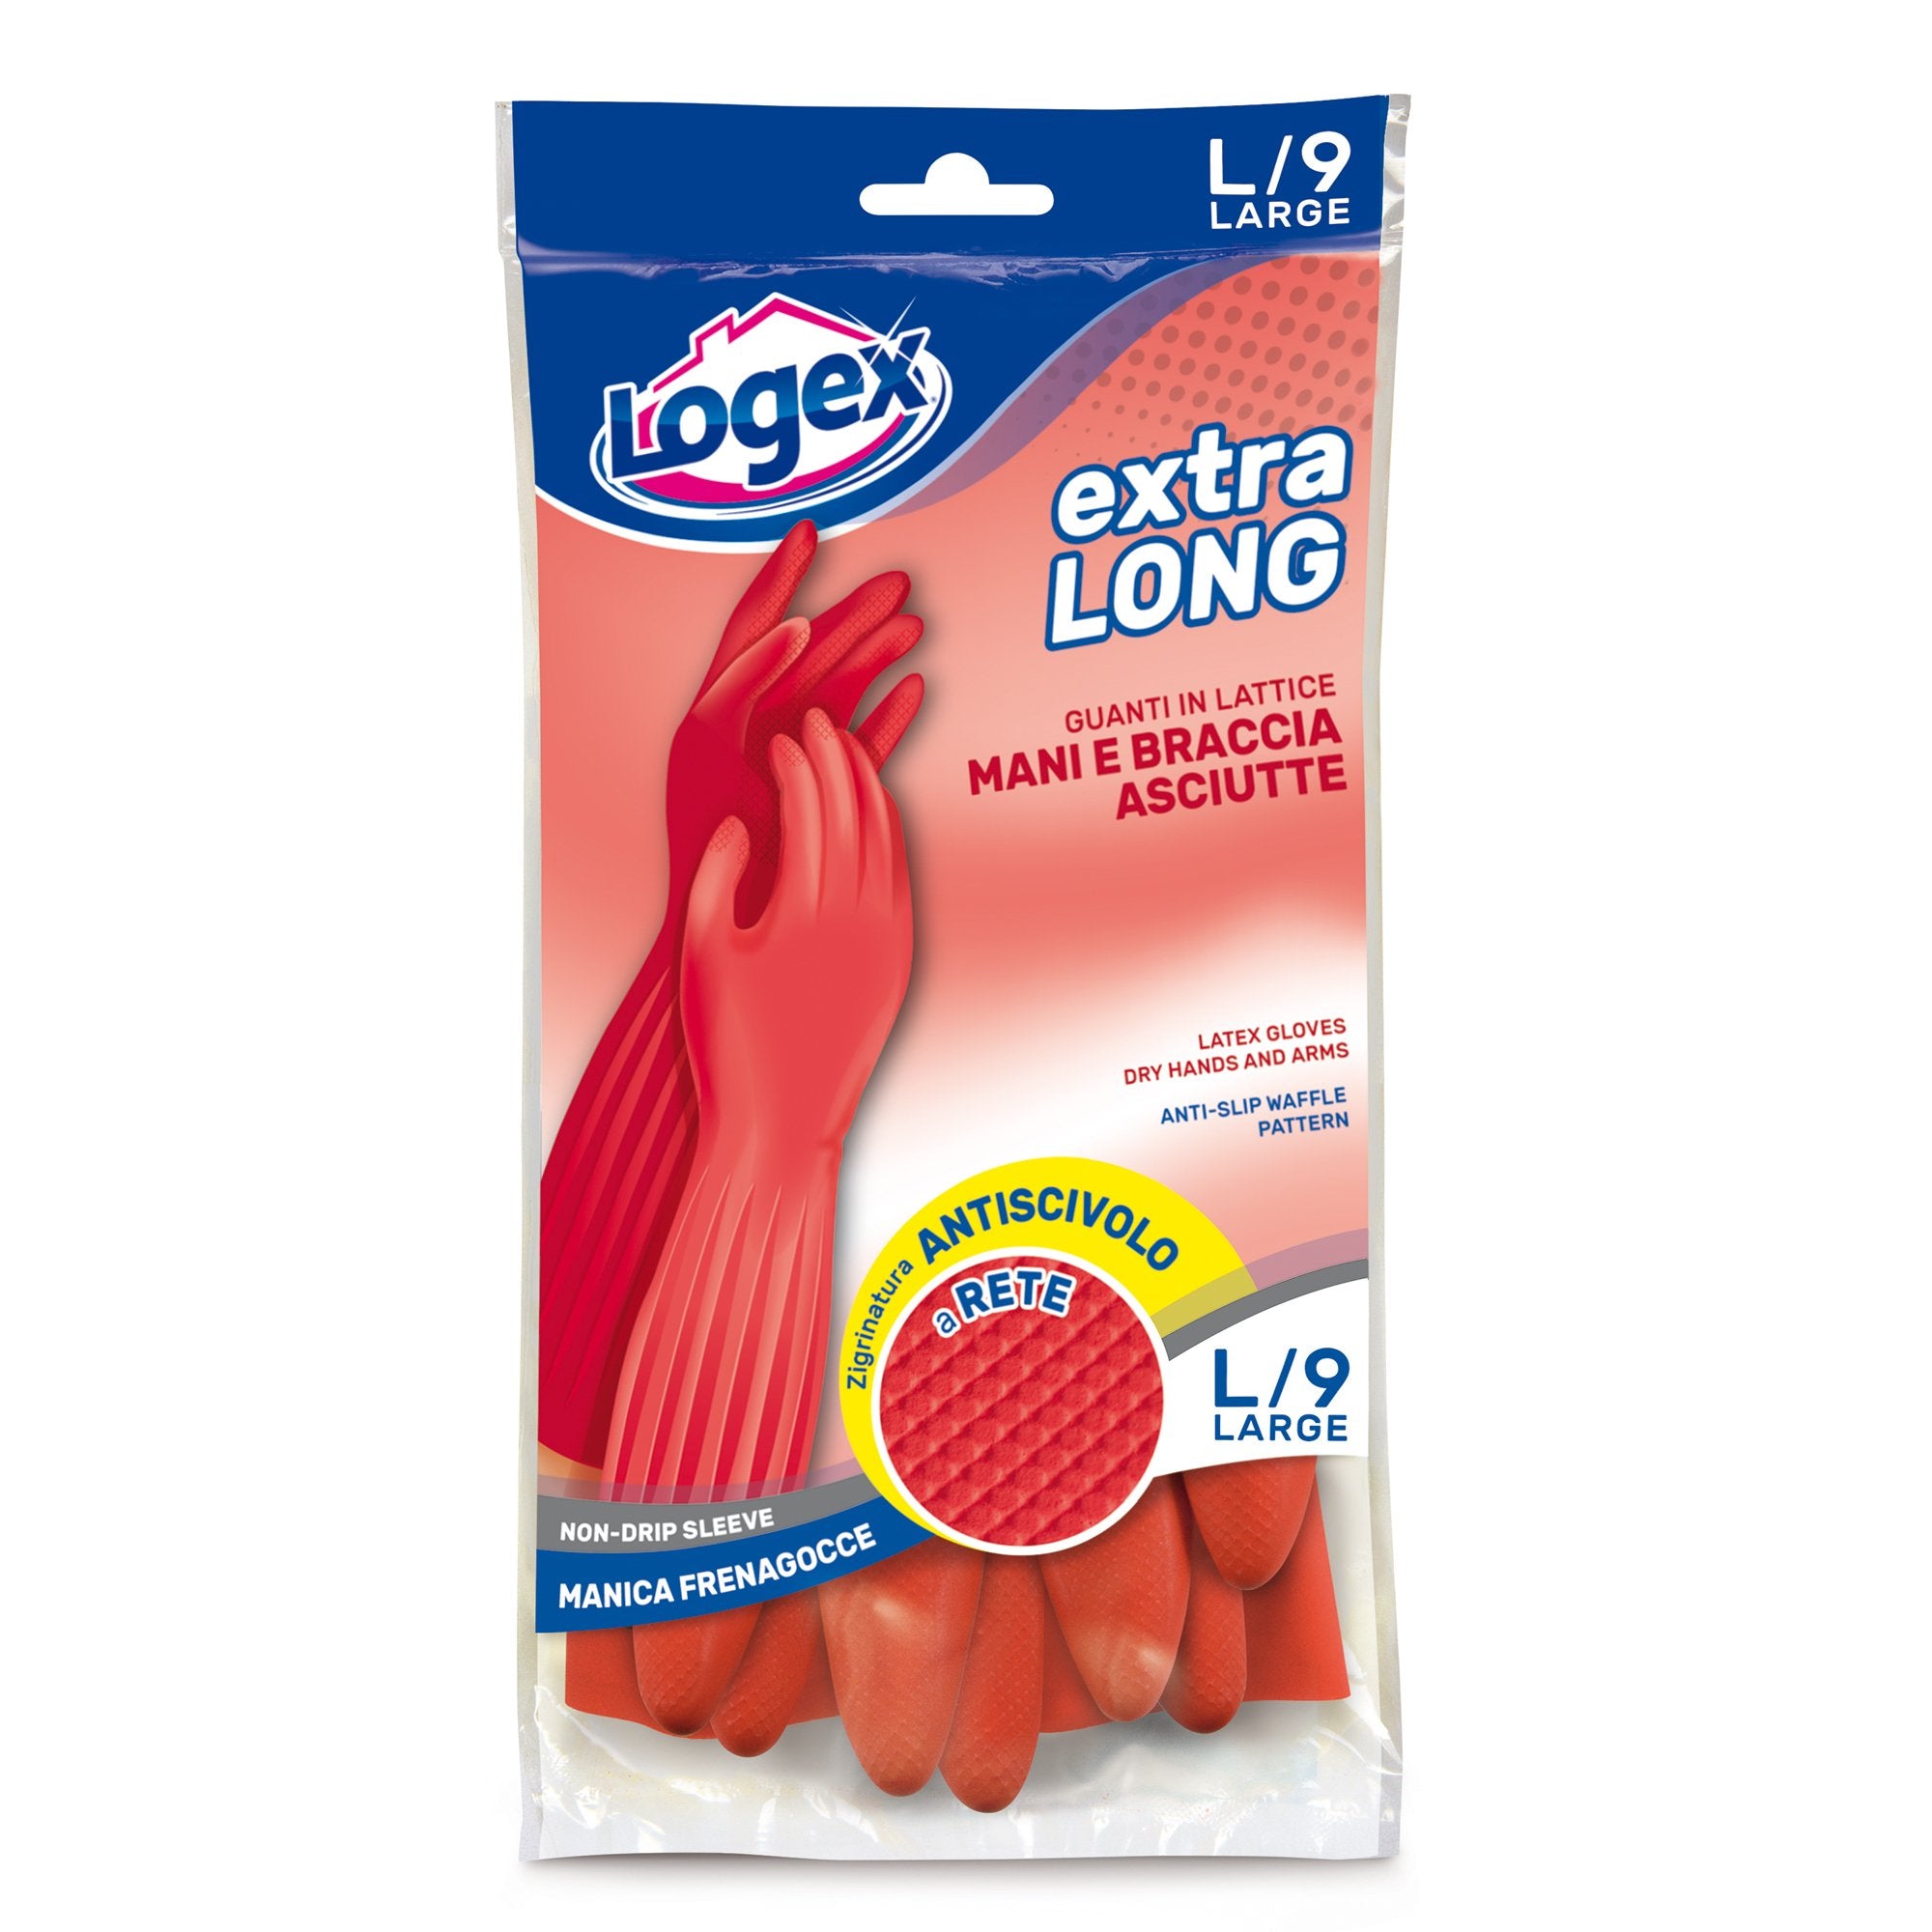 logex-professional-guanti-lattice-extralong-tg-l-rosso